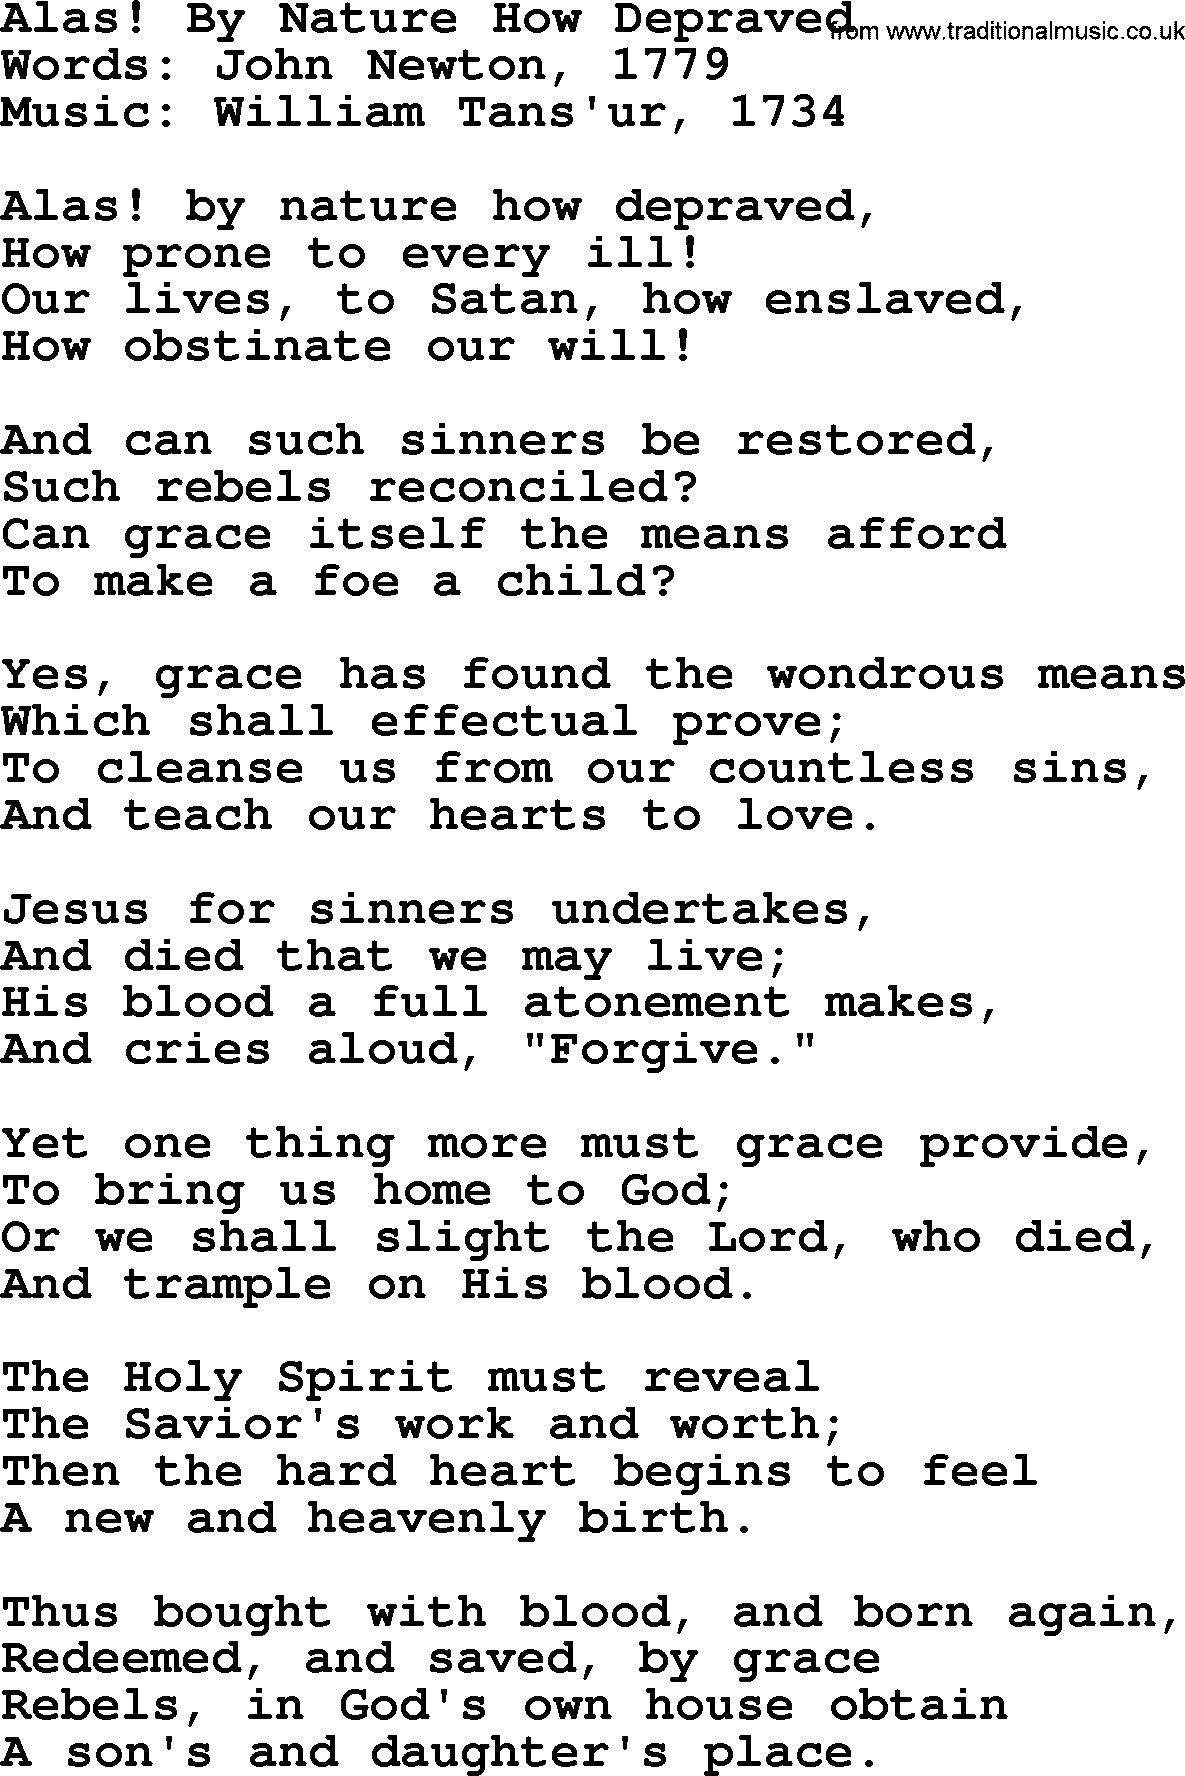 Forgiveness hymns, Hymn: Alas! By Nature How Depraved, lyrics with PDF